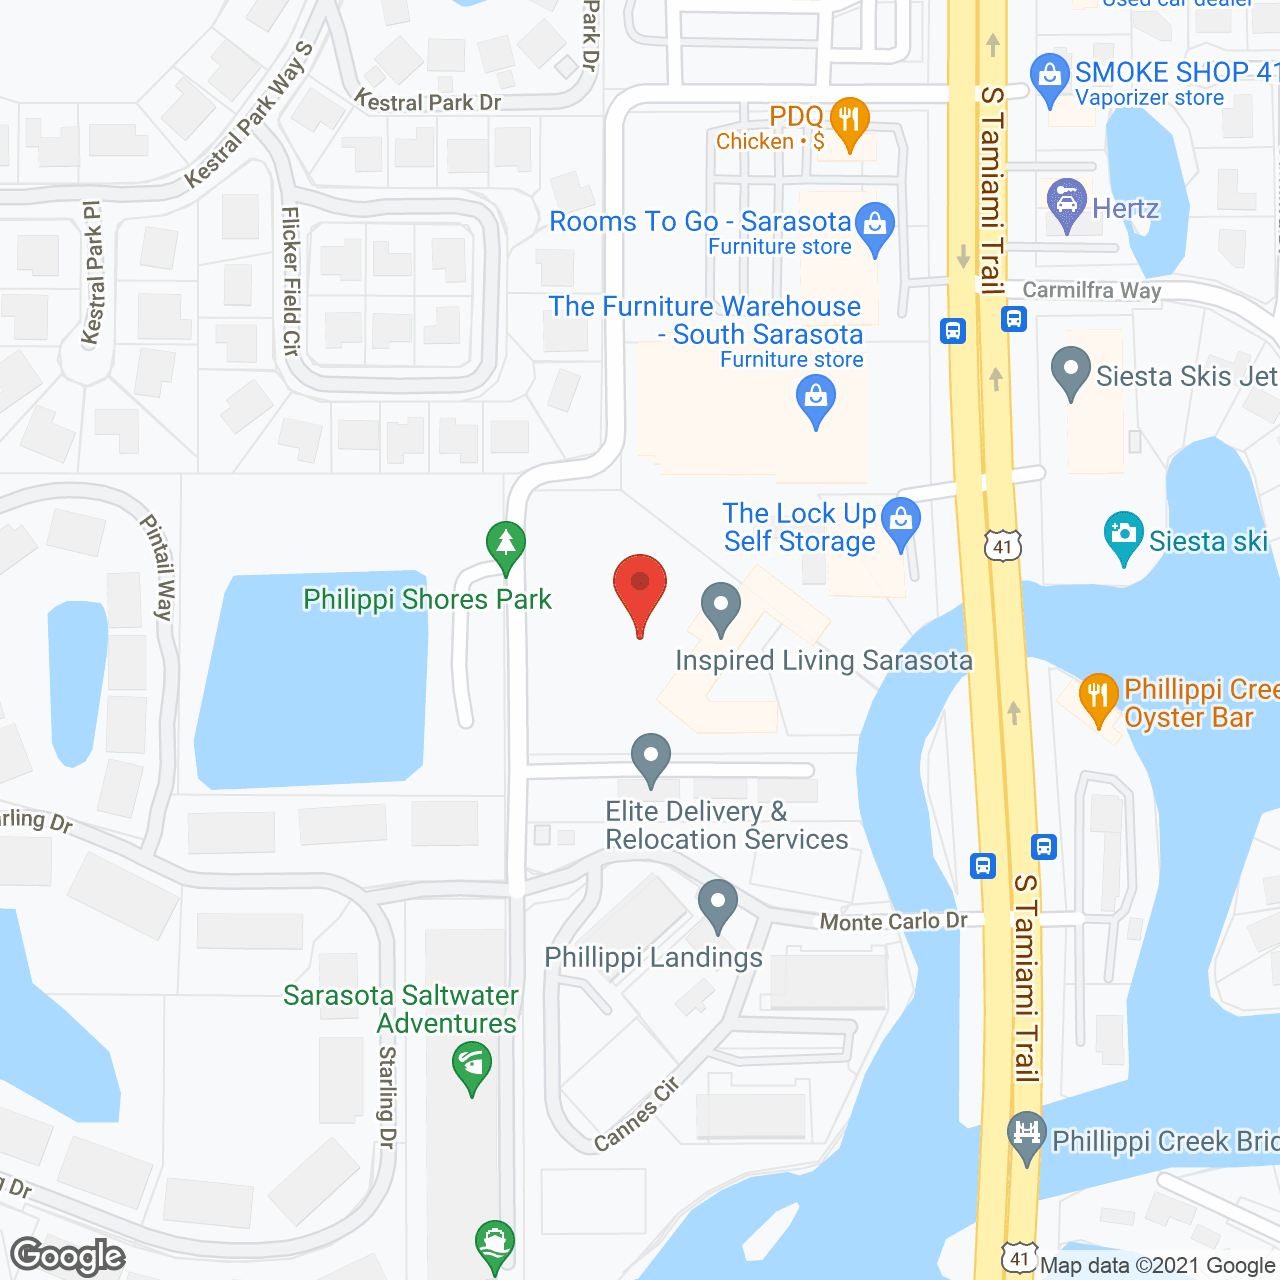 Inspired Living at Sarasota in google map